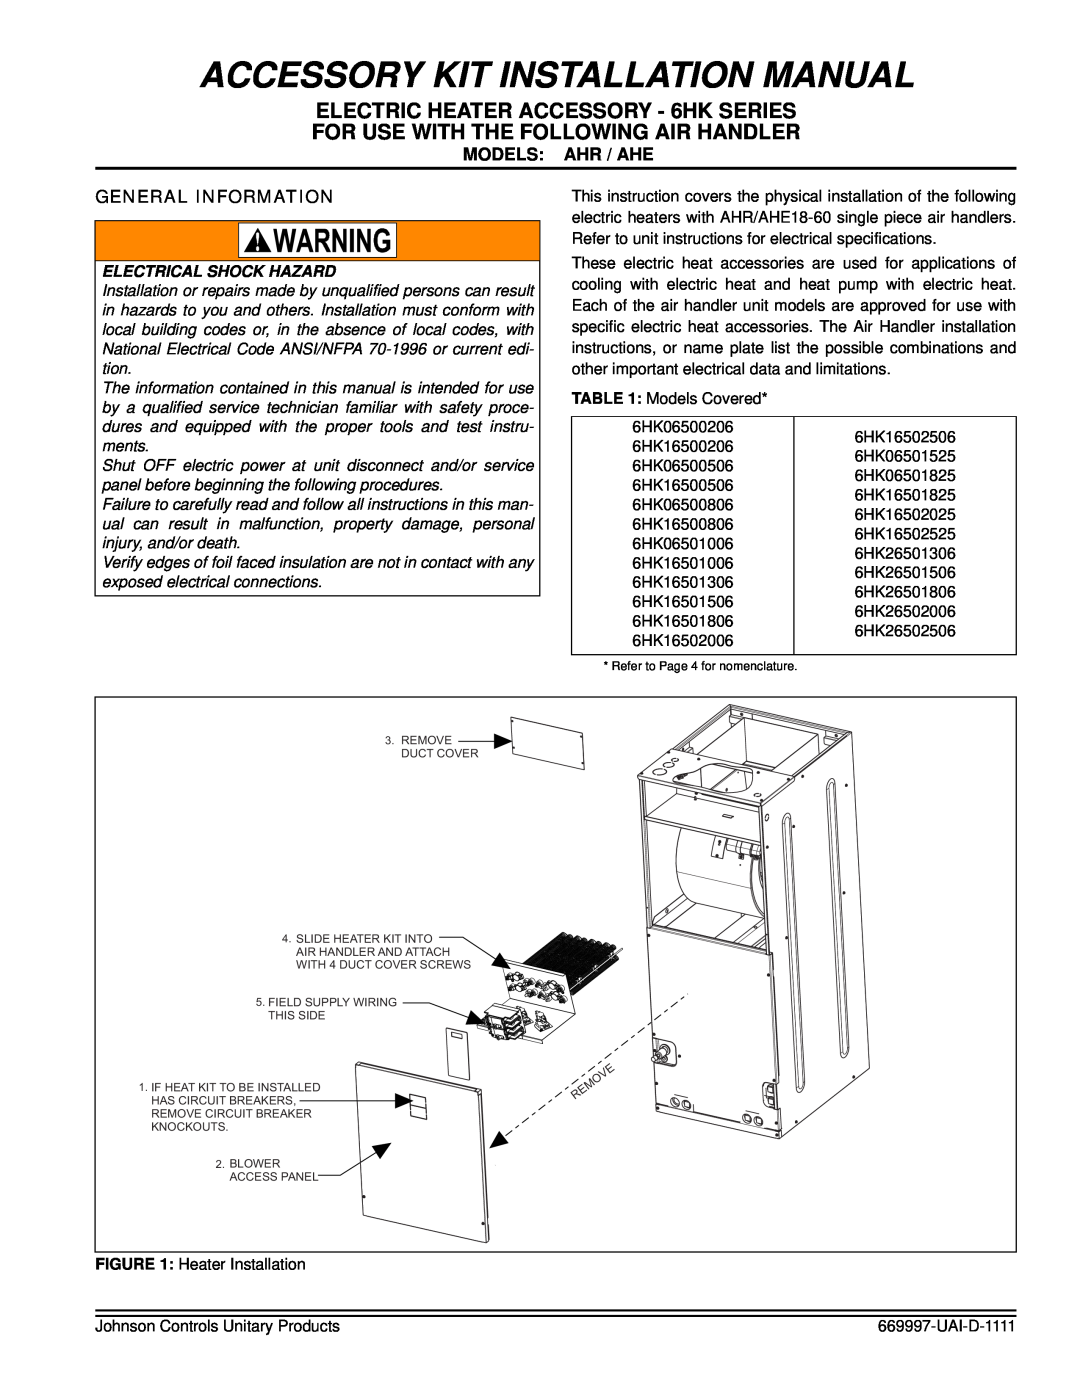 Johnson Controls AHR, AHE installation manual Models Ahr / Ahe, General Information, Accessory Kit Installation Manual 